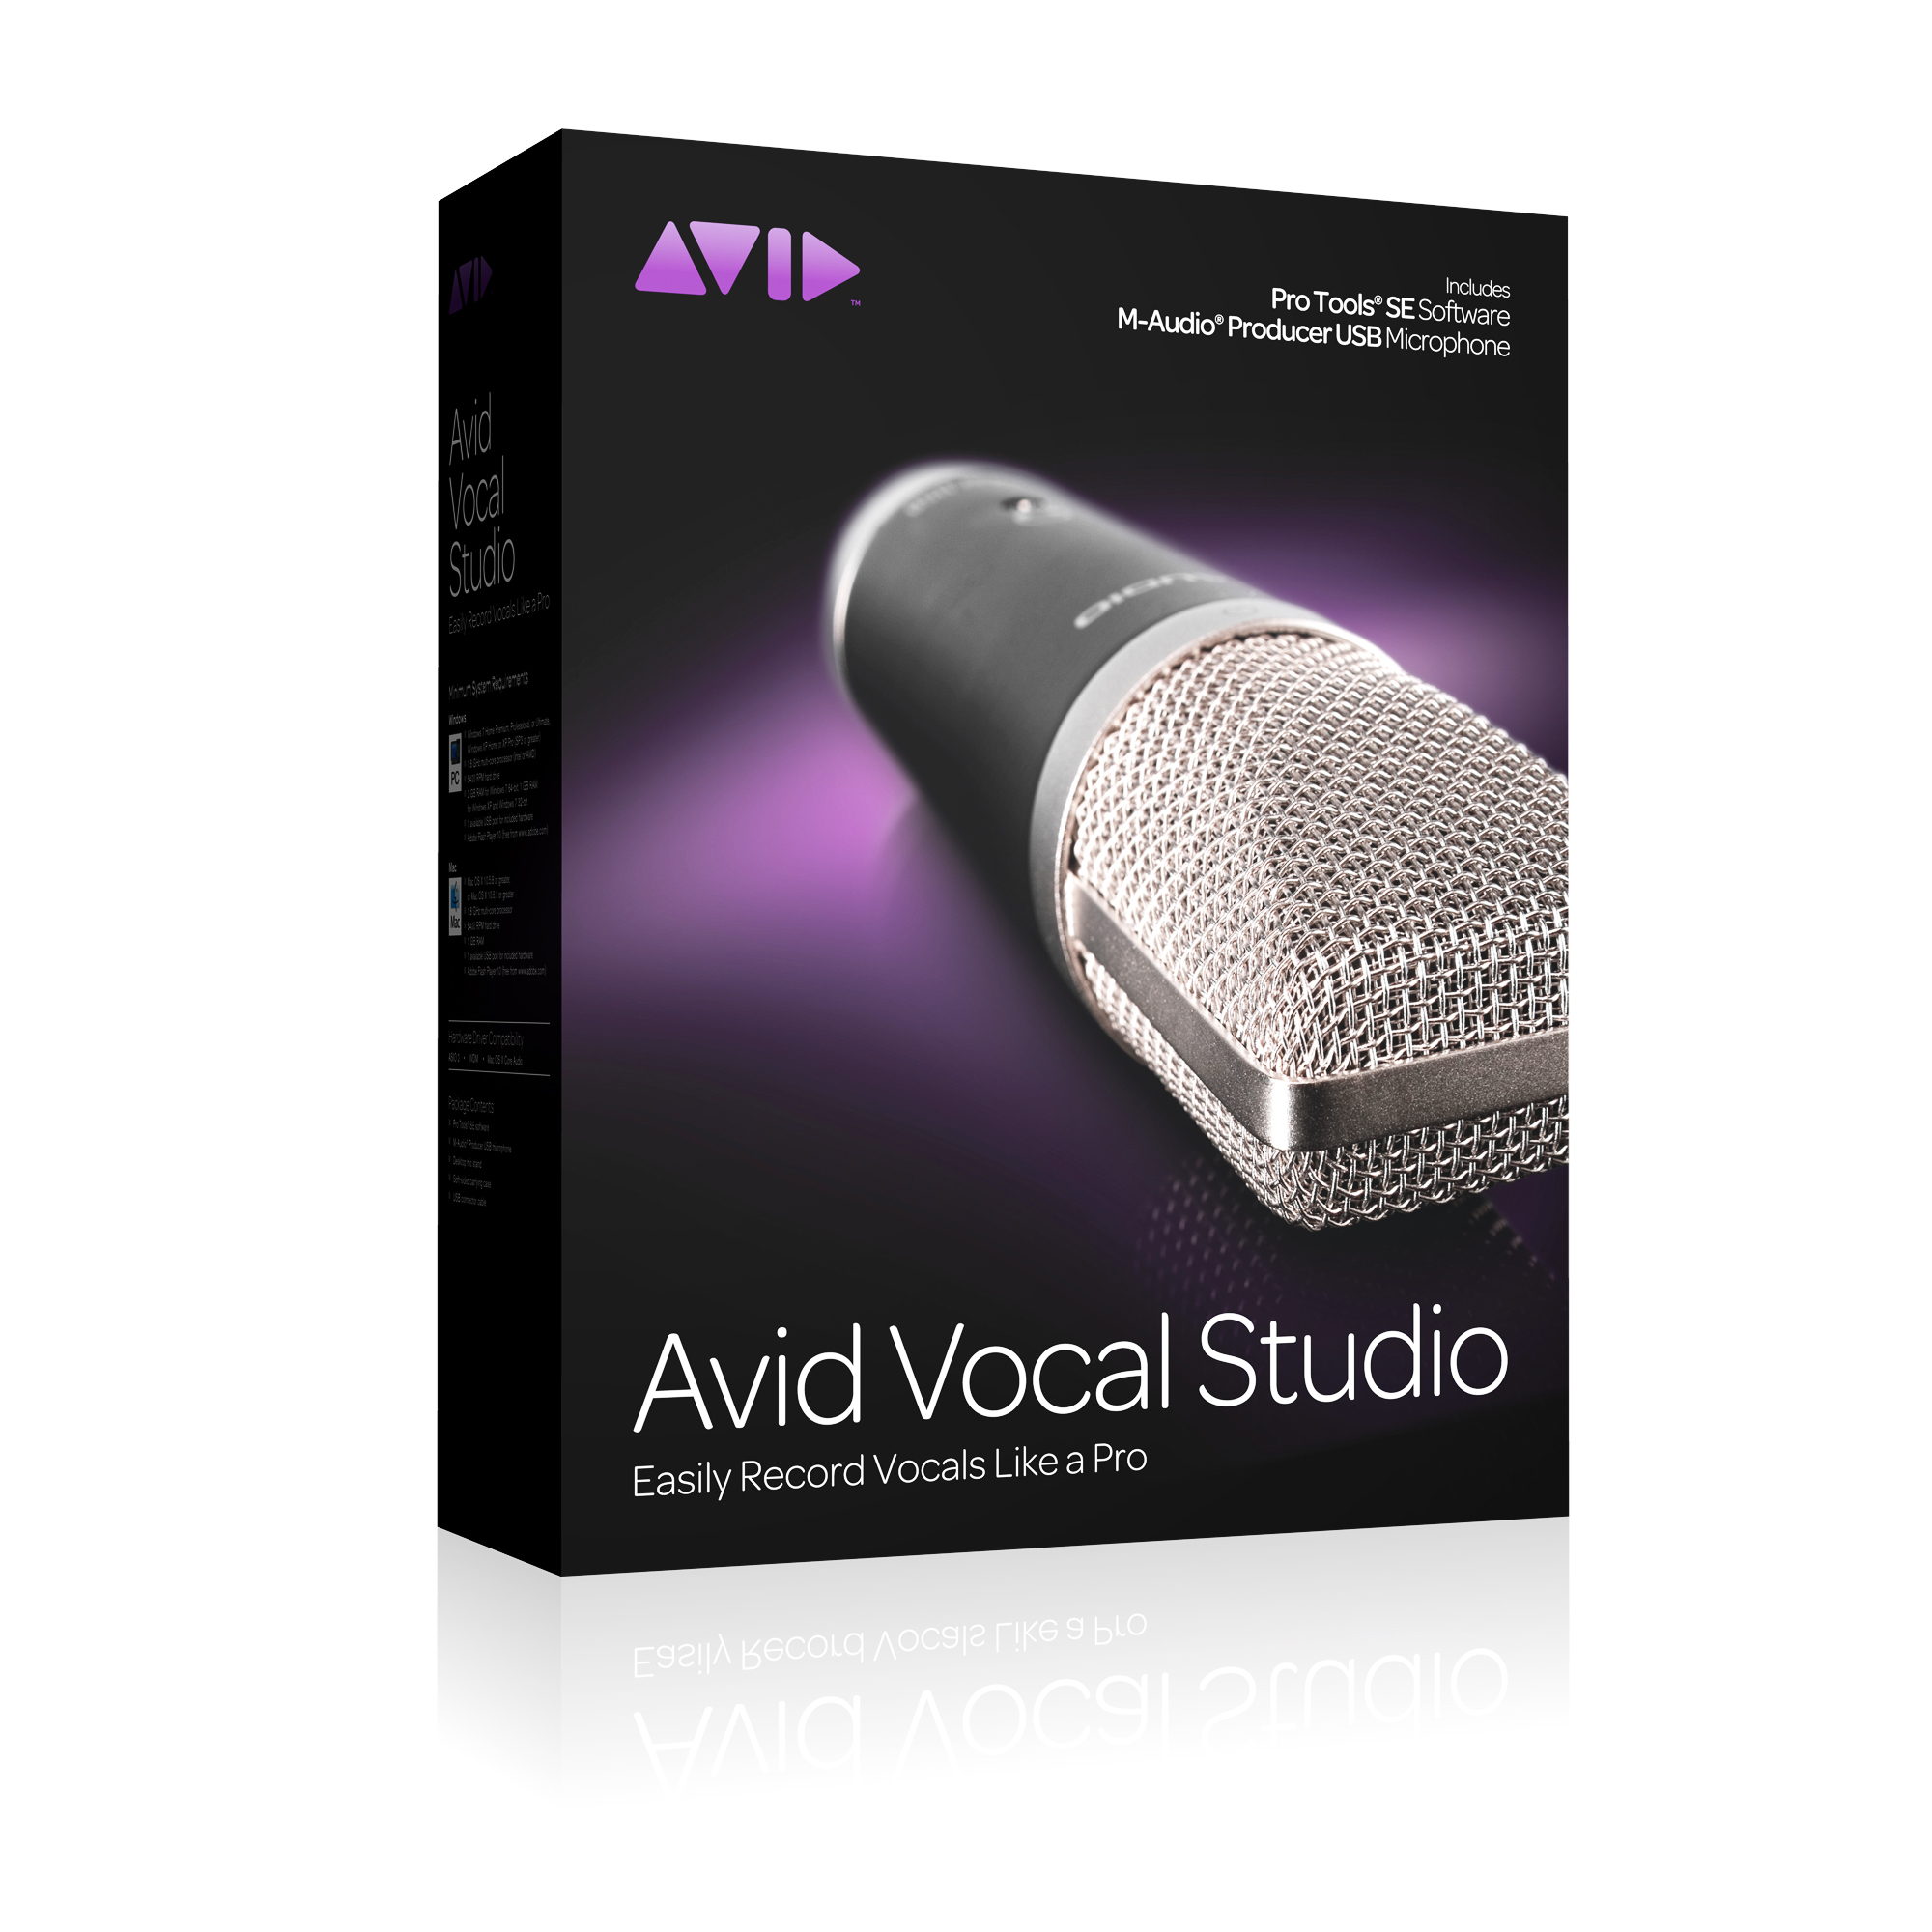 avid vocal studio software free download